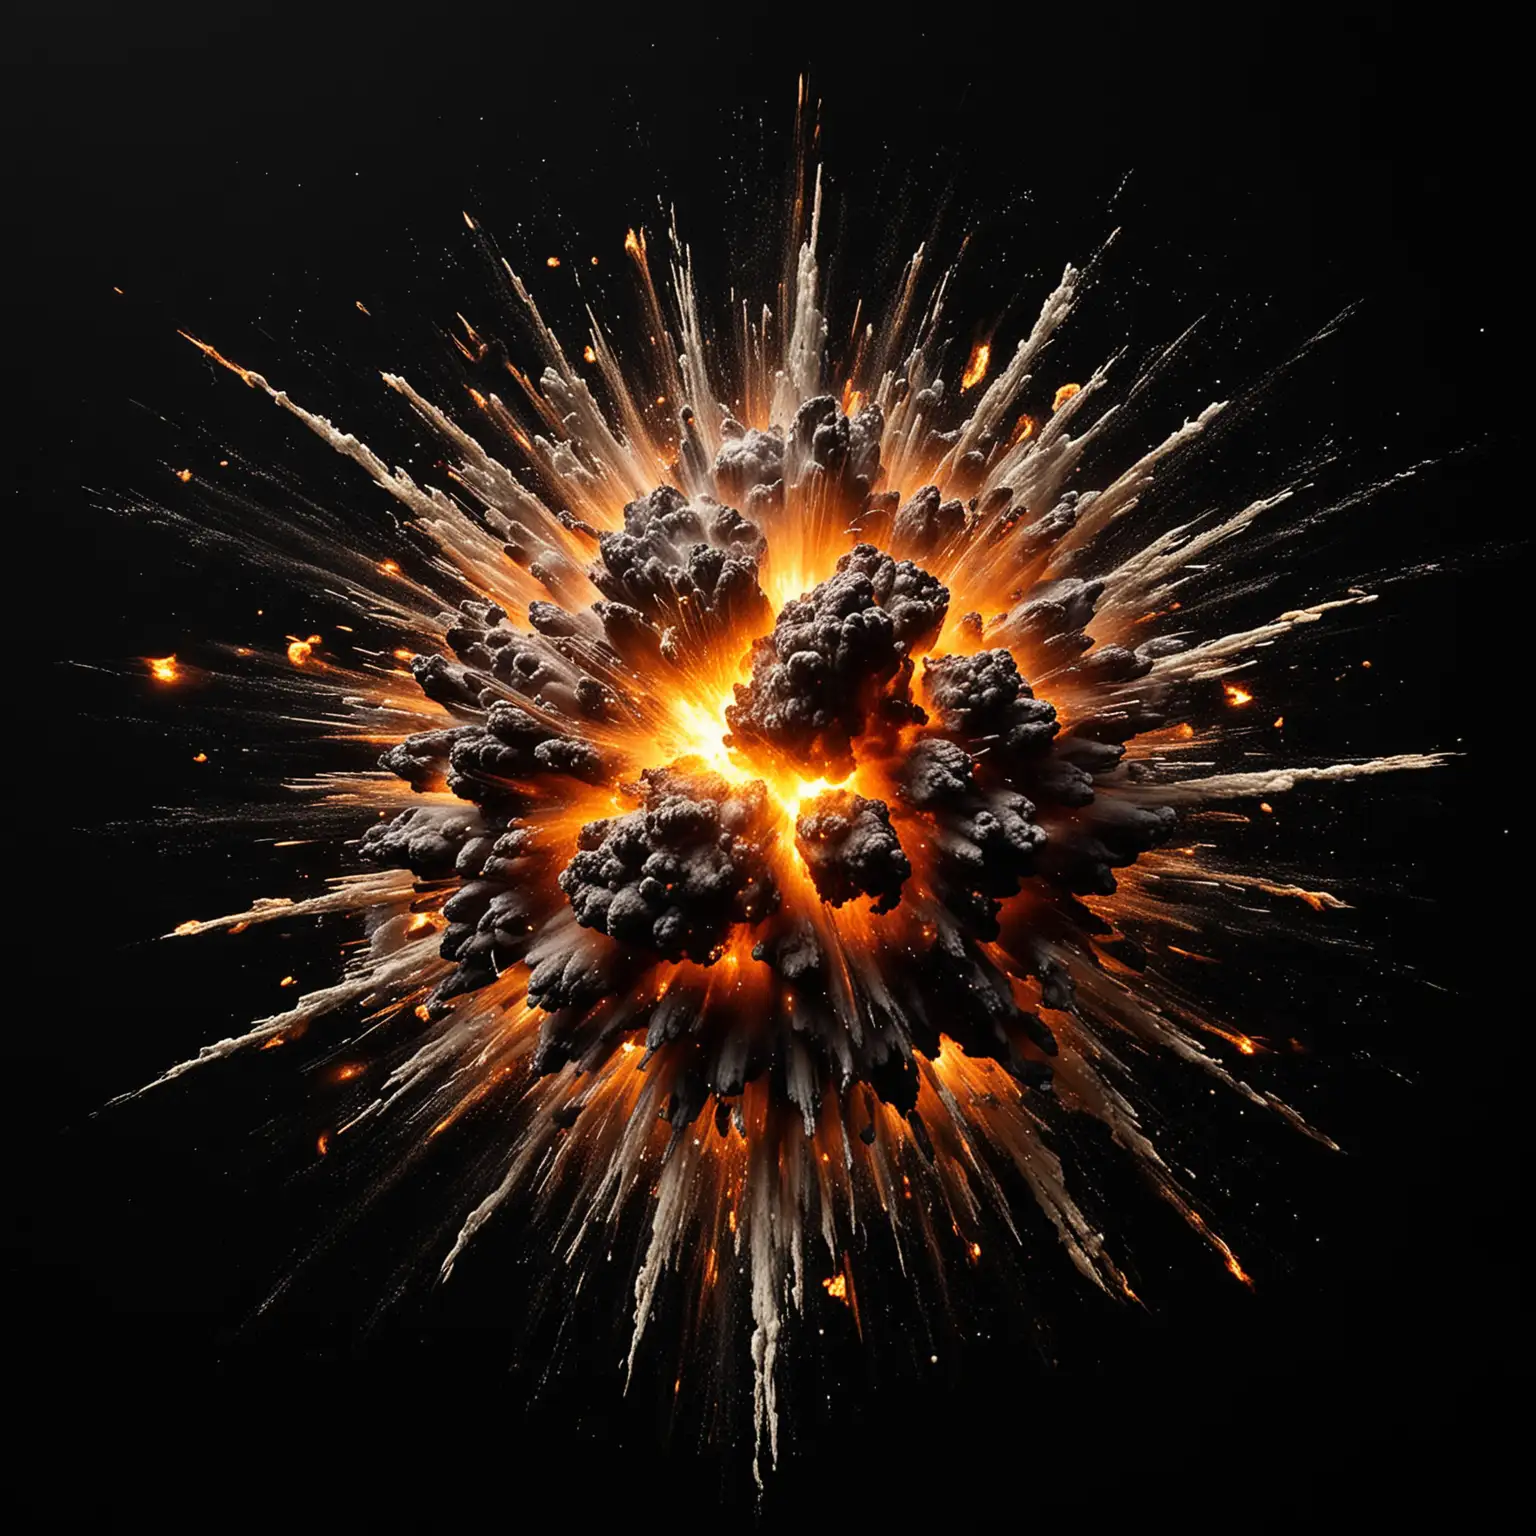 explosion against black background